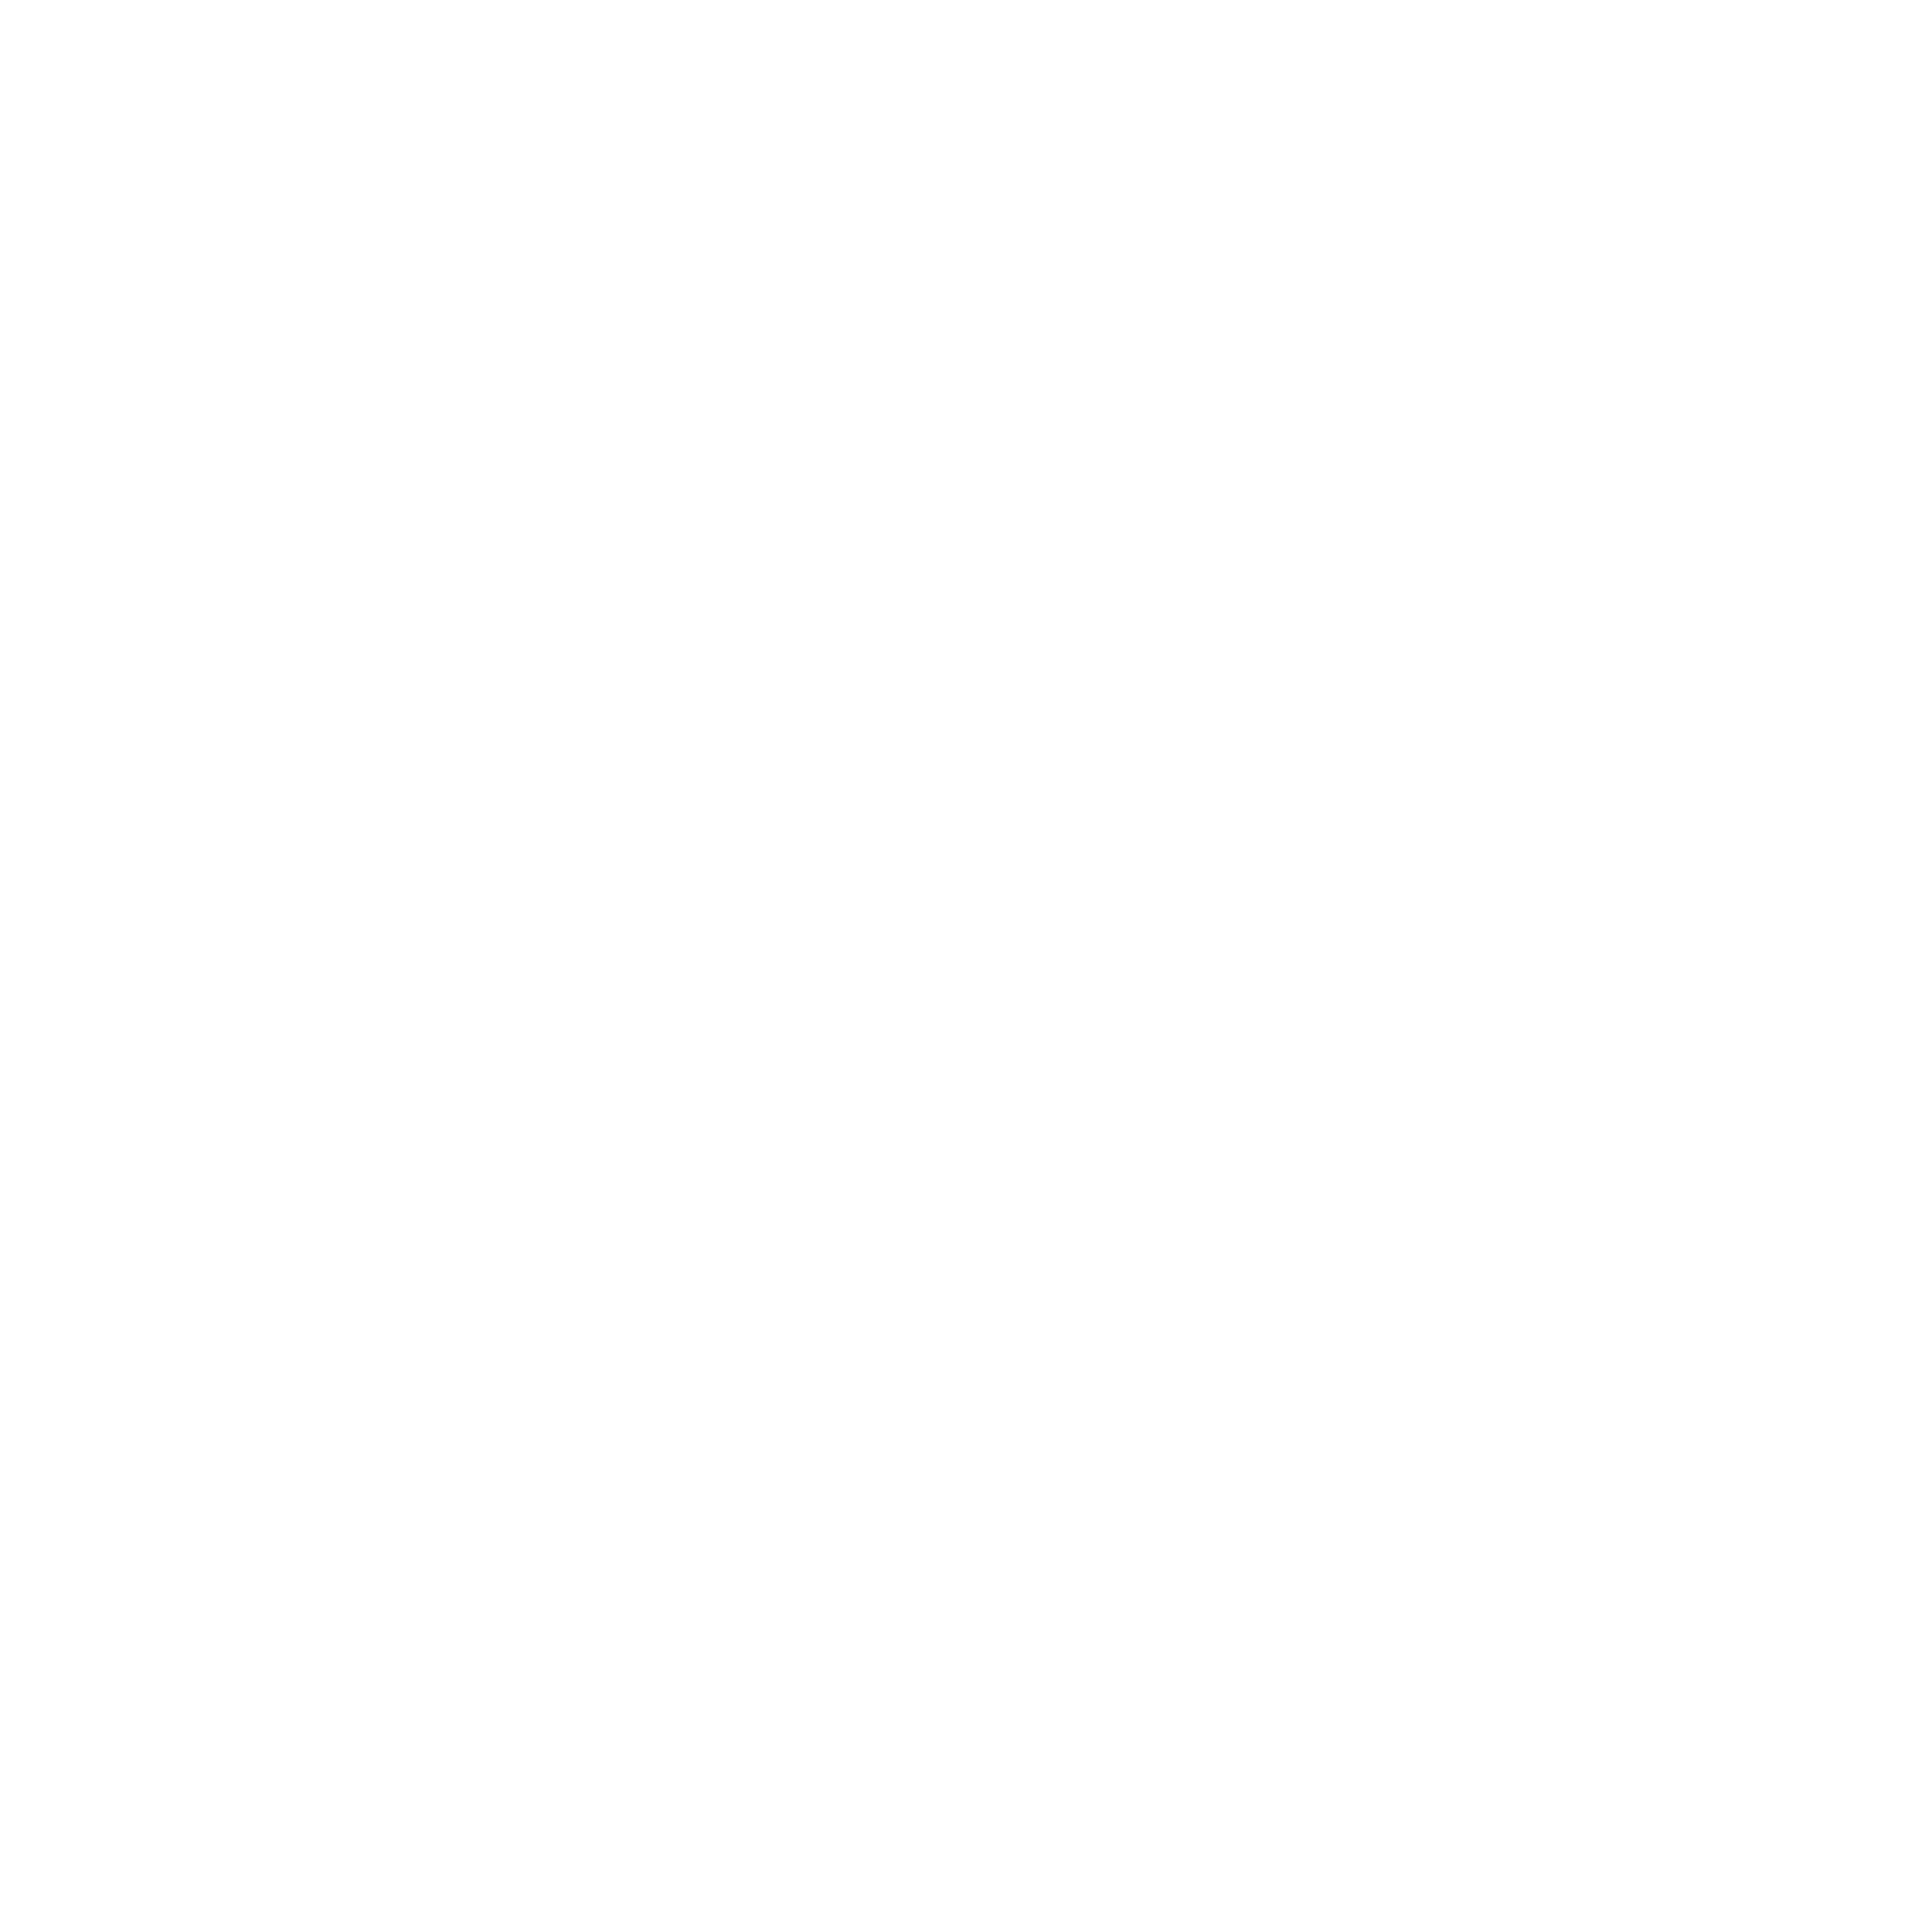 Bass Head Inc.